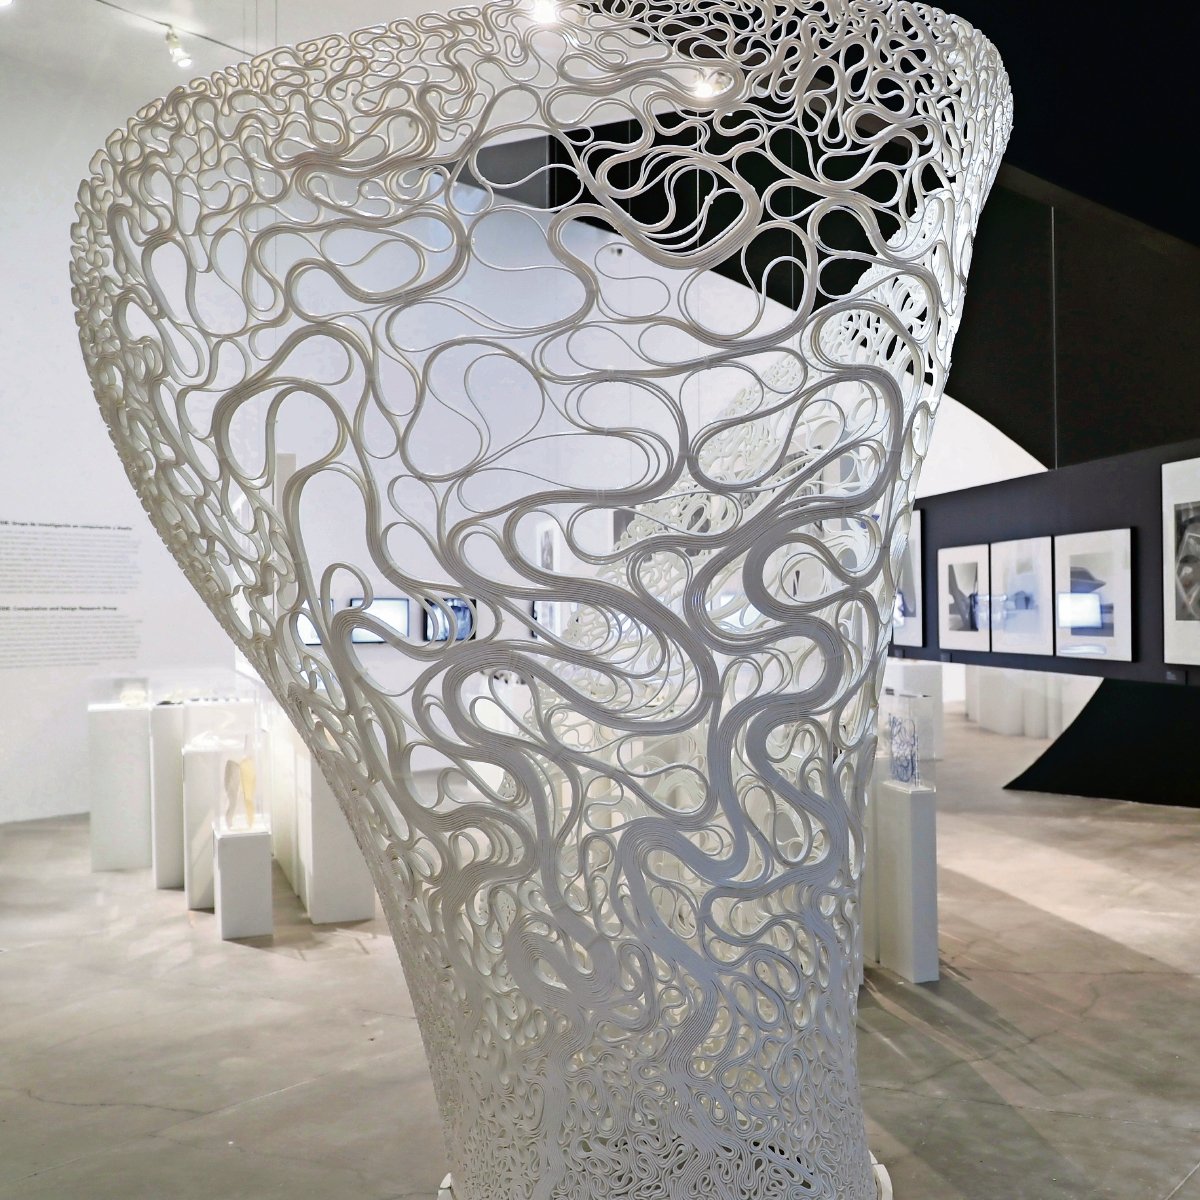 El diseño de Zaha Hadid Architects, en el MUAC